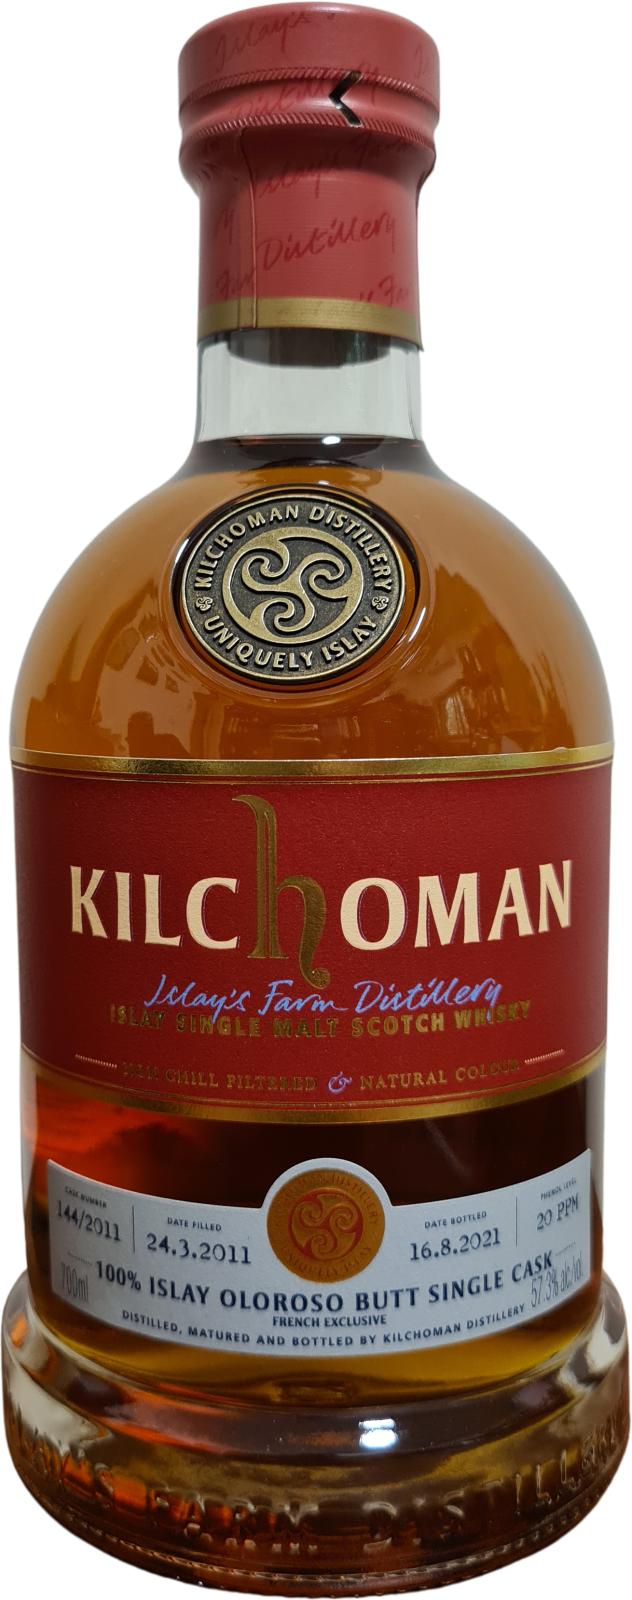 Kilchoman 2011 100% Islay Oloroso Sherry Butt 10 Year Old 2021 Release (Cask #144/2011) Single Malt Scotch Whisky | 700ML